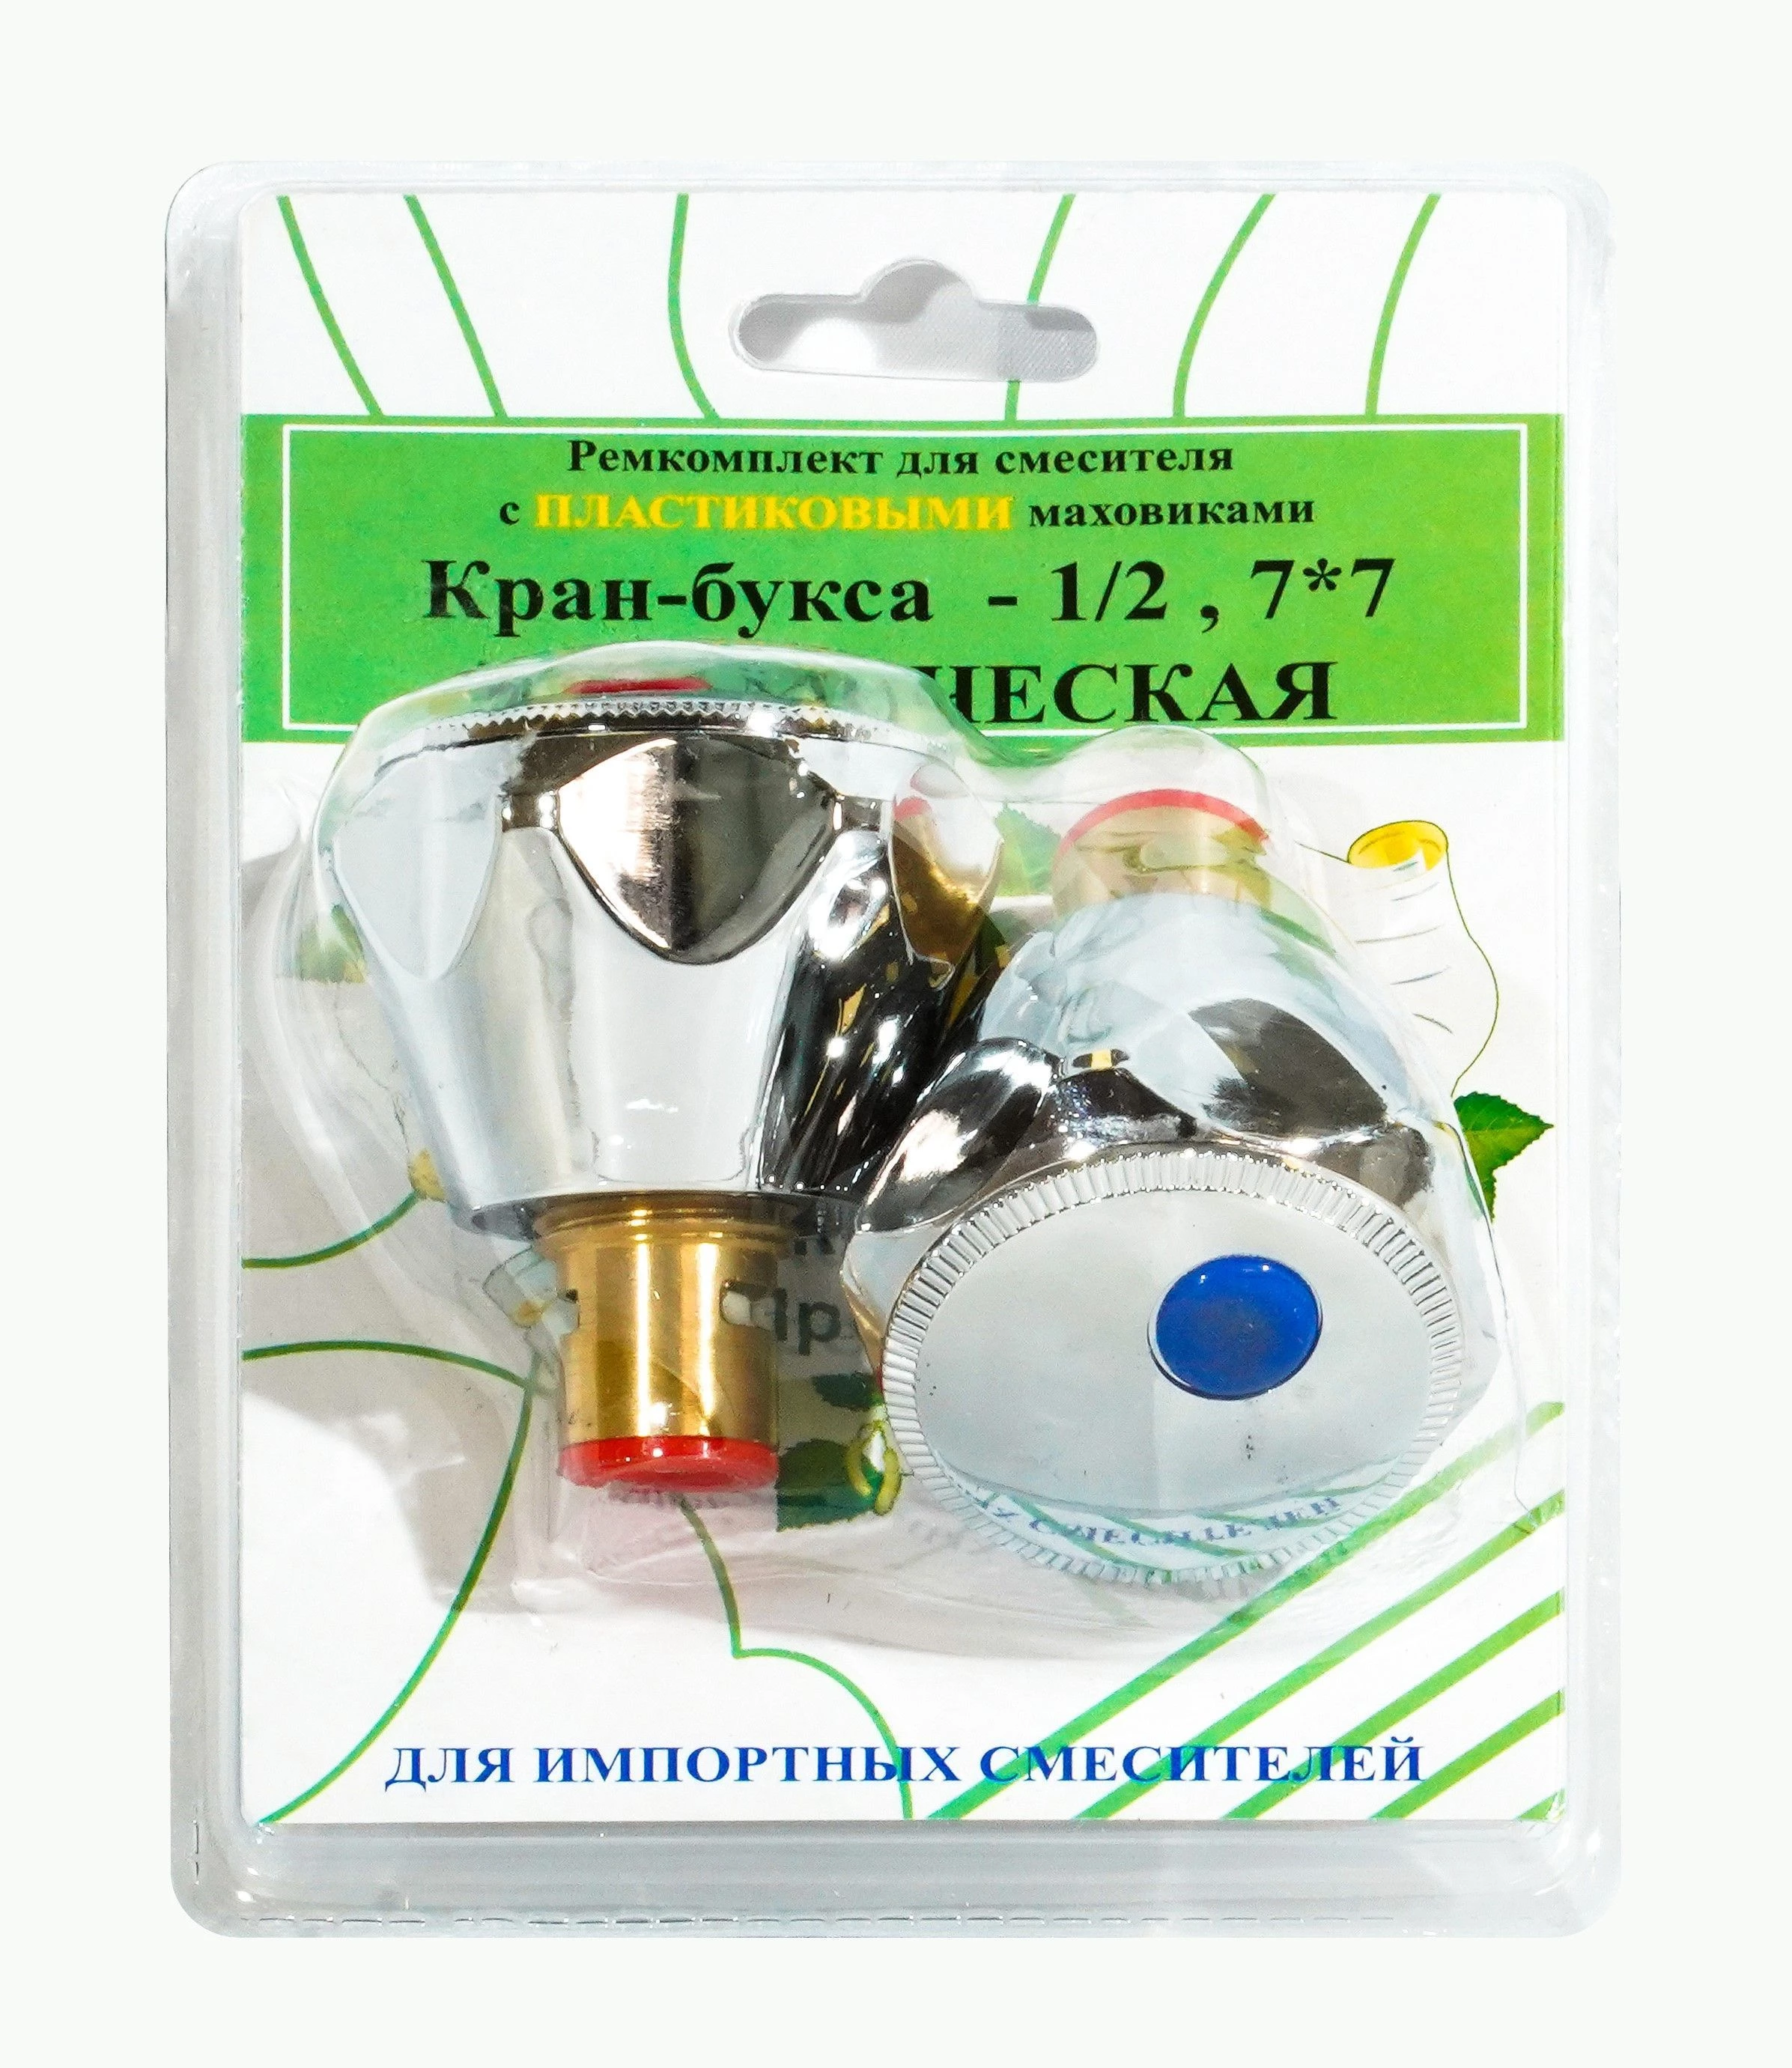 Комплект кран-буксы ПСМ 1/2" с маховиками (Мария) пластик ПСМ RK-IPM - фото 1